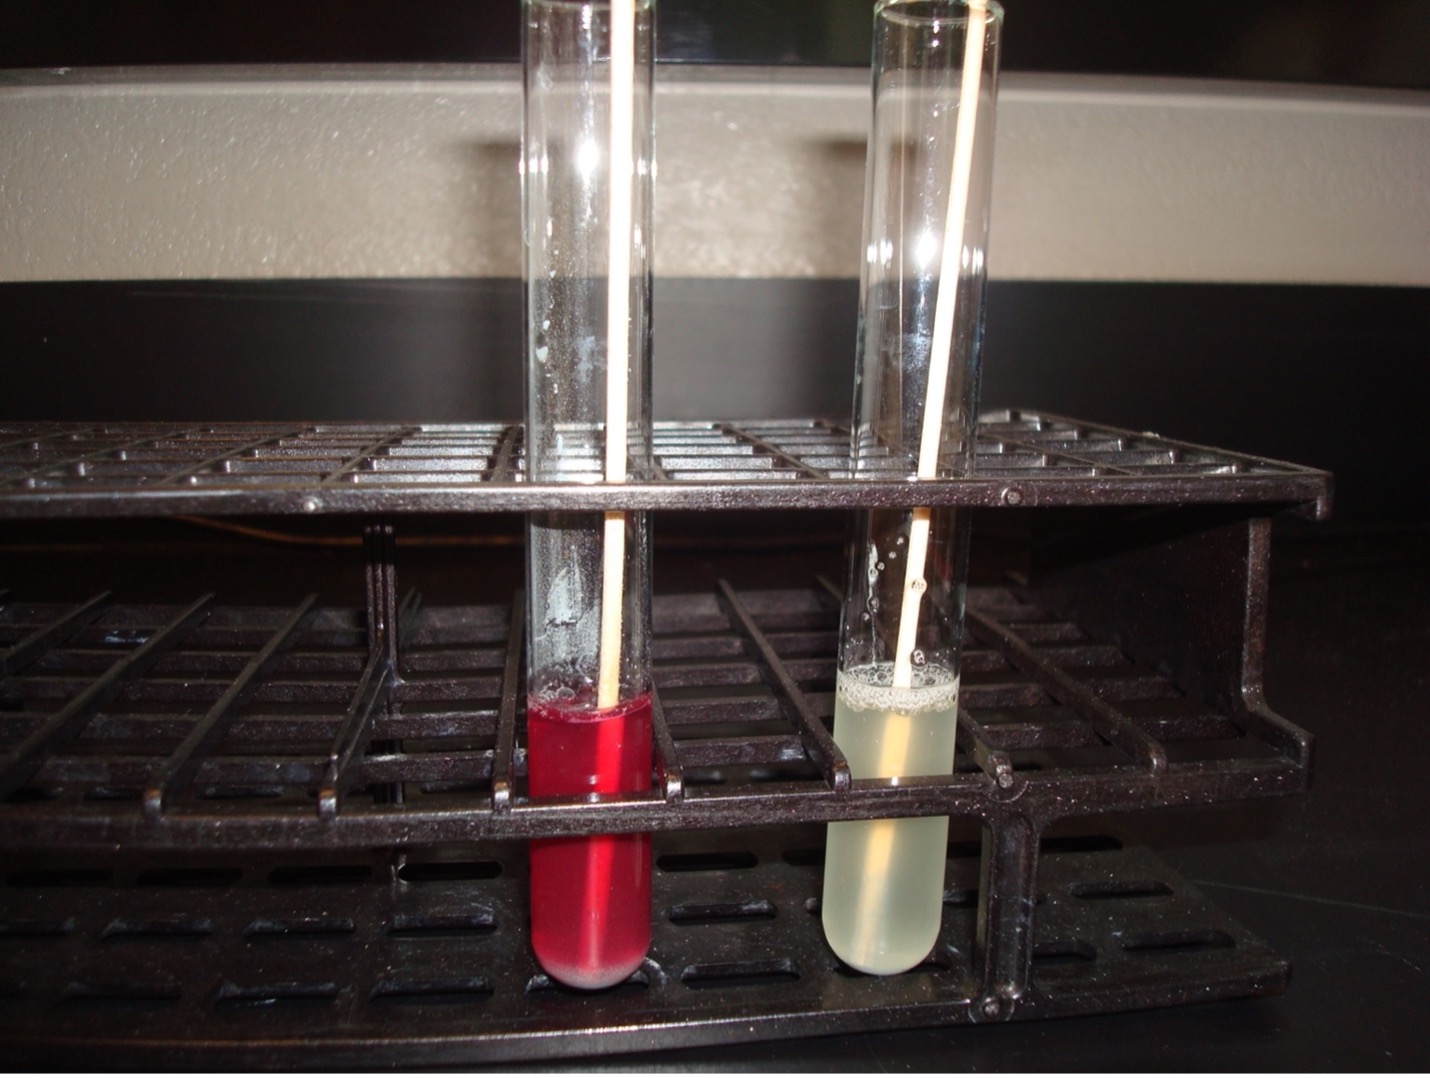 Nitrate Reduction Test After Adding Sulfanilic Acid, Alpha-naphthylamine, and Zinc